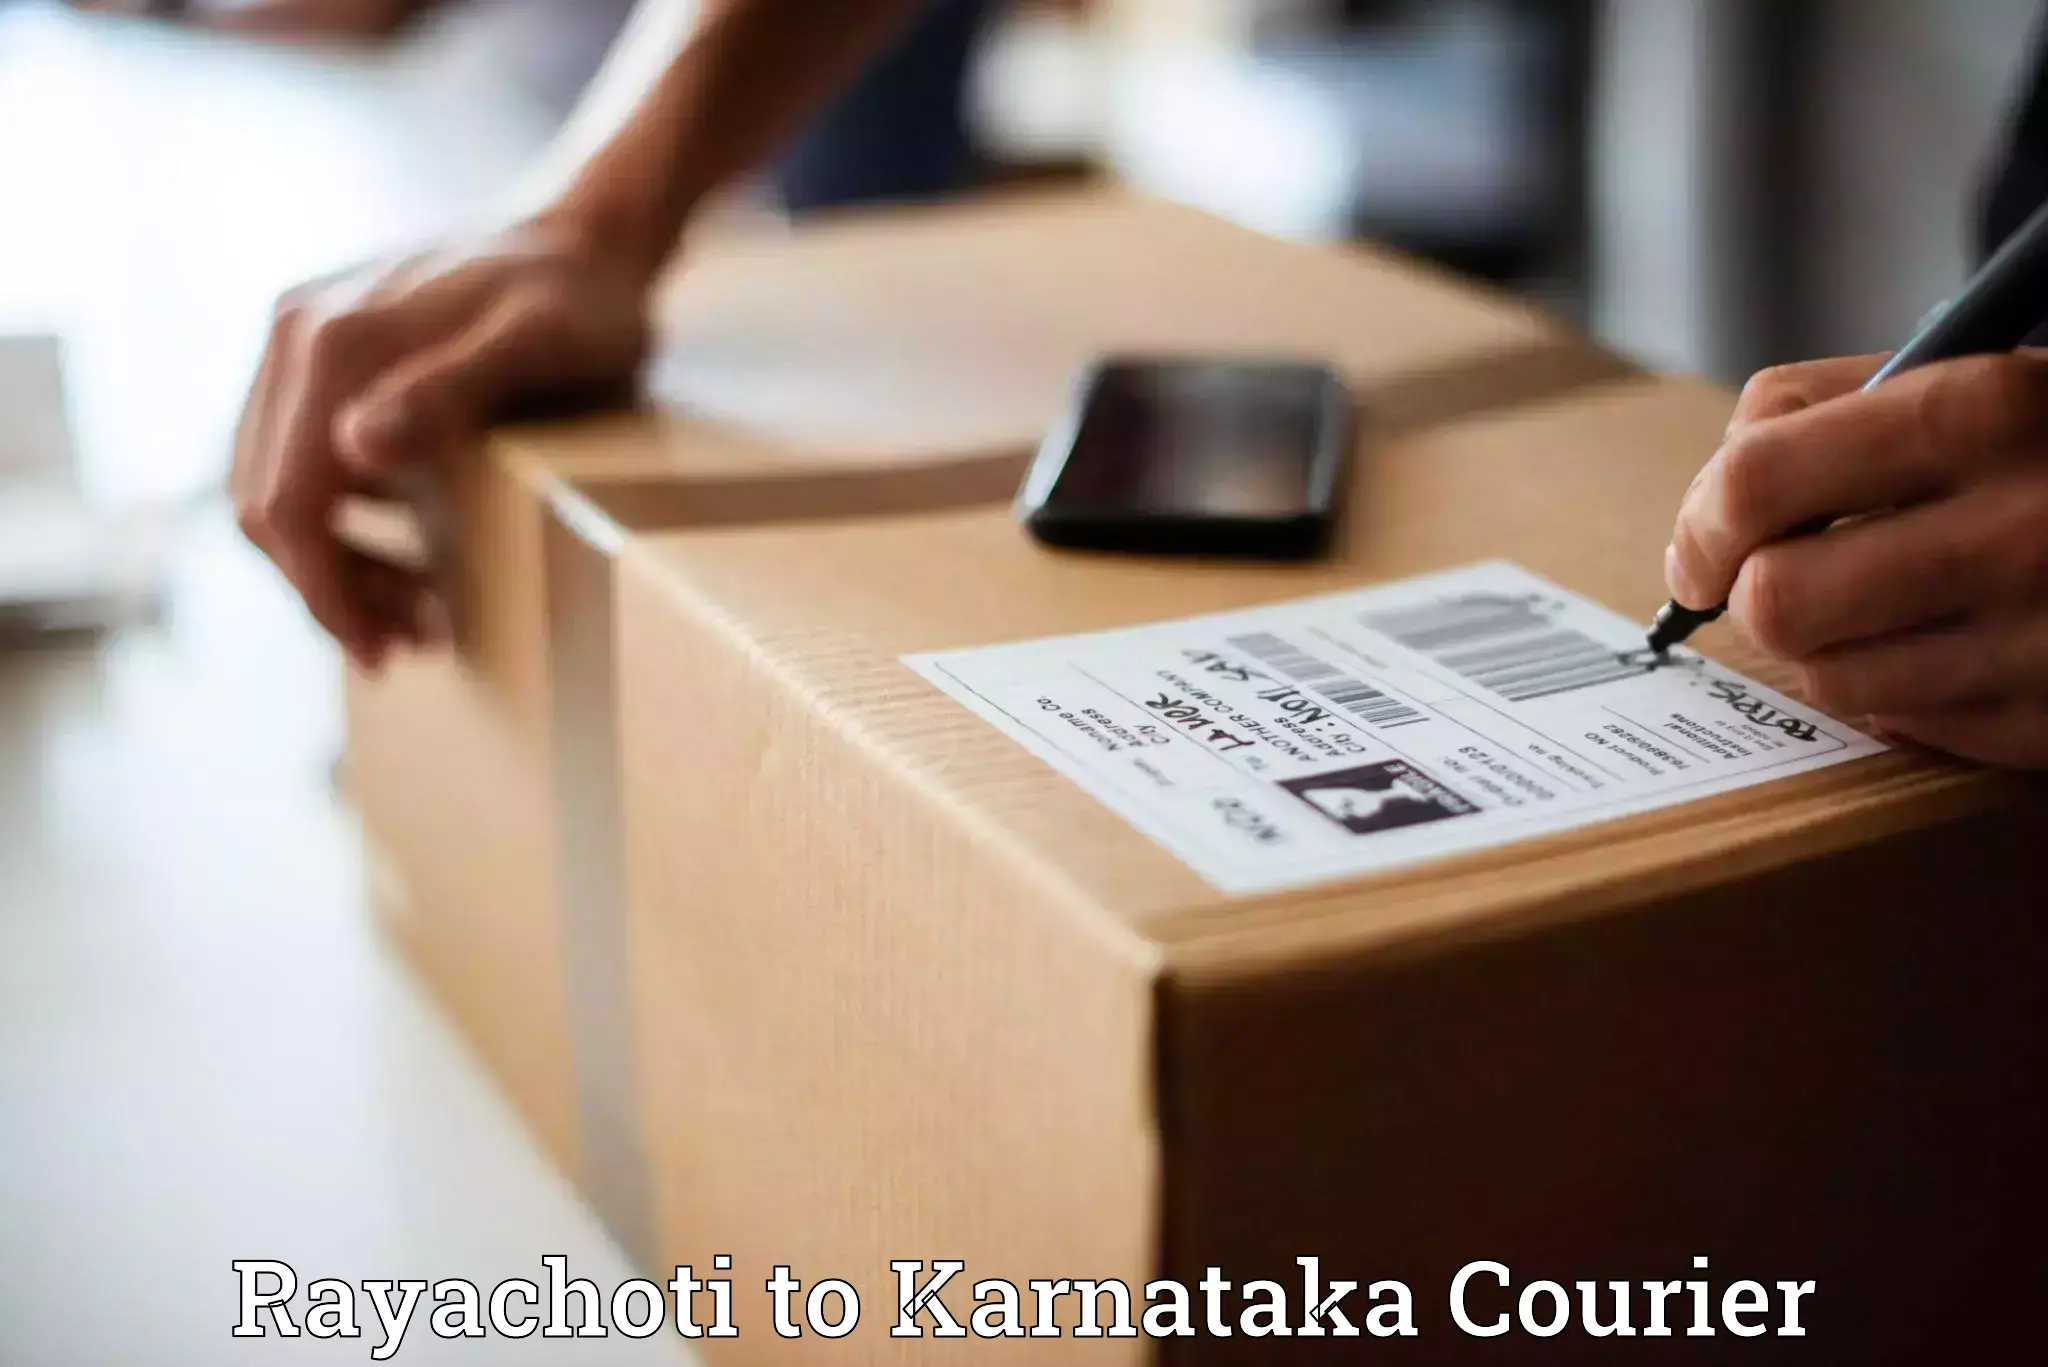 Tailored delivery services Rayachoti to Karnataka